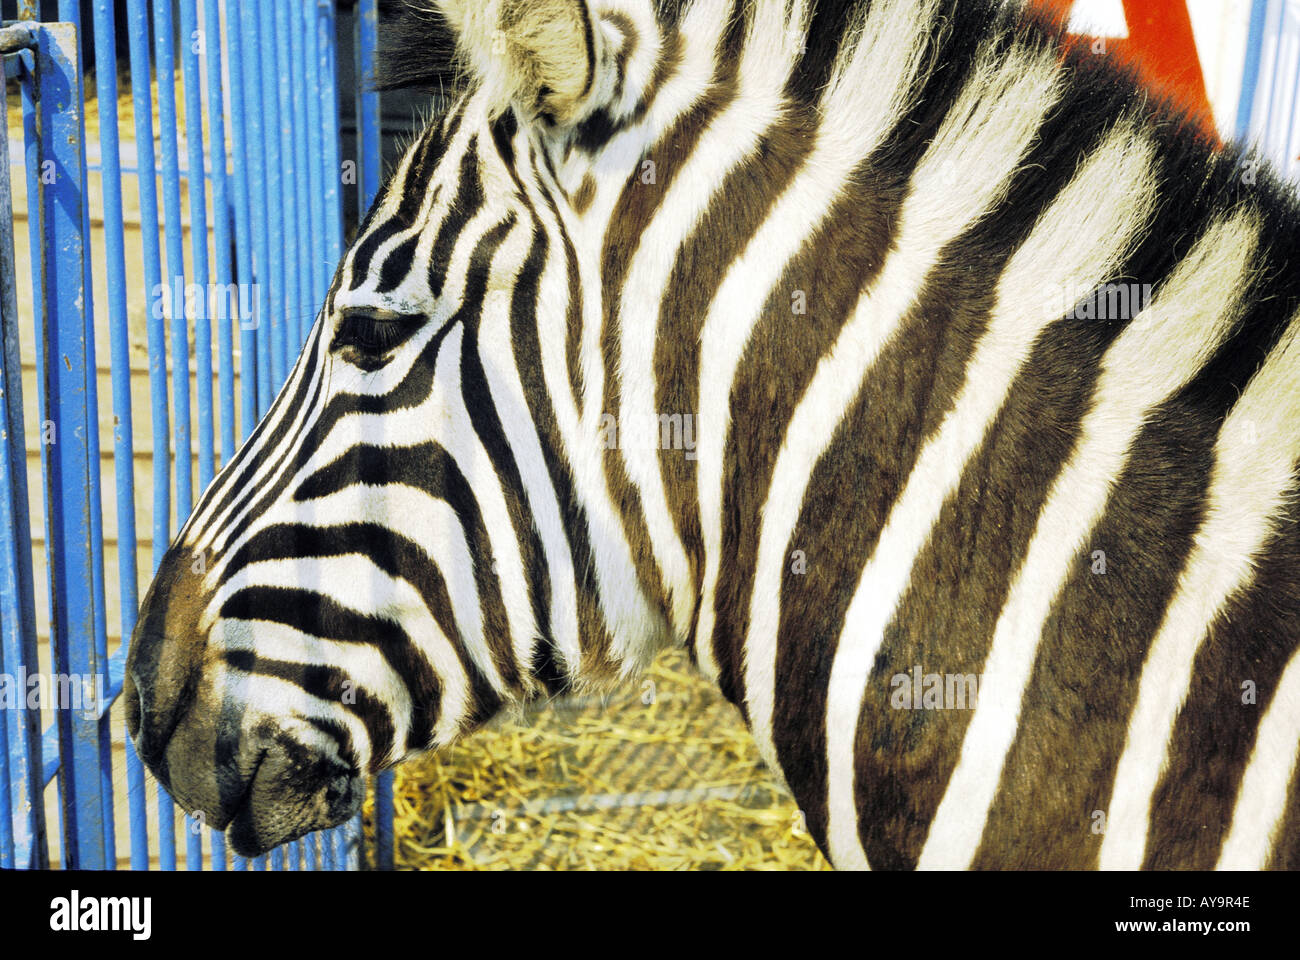 Zebra in einem Kaefig Foto Stock